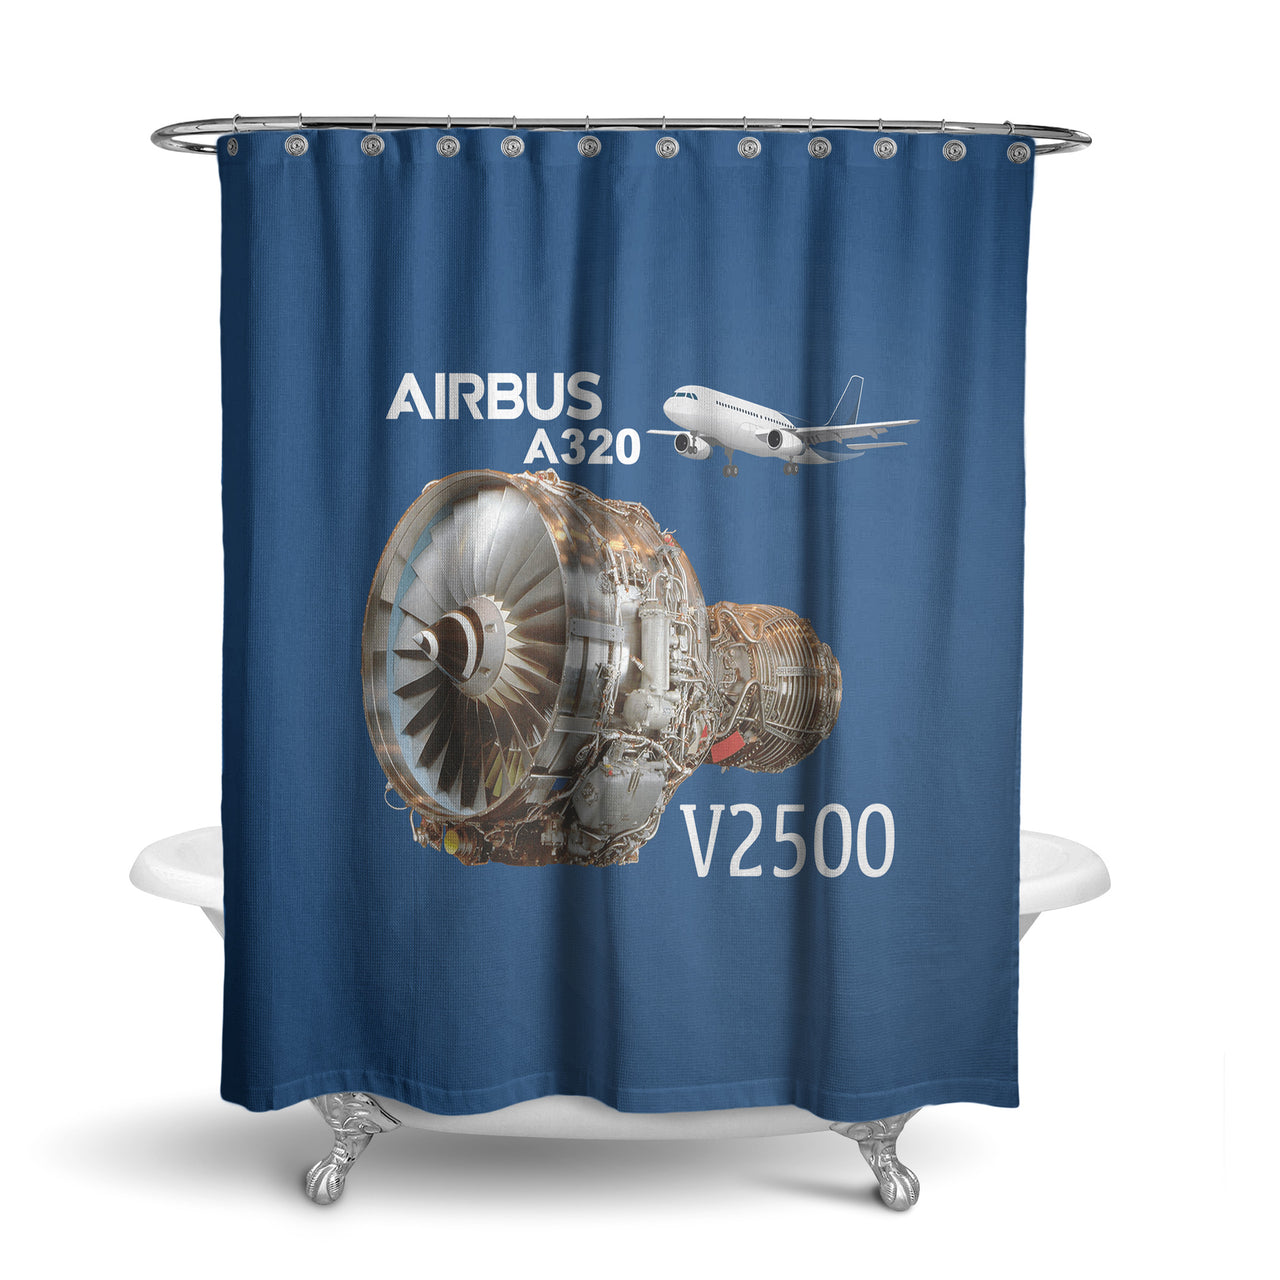 Airbus A320 & V2500 Engine Designed Shower Curtains